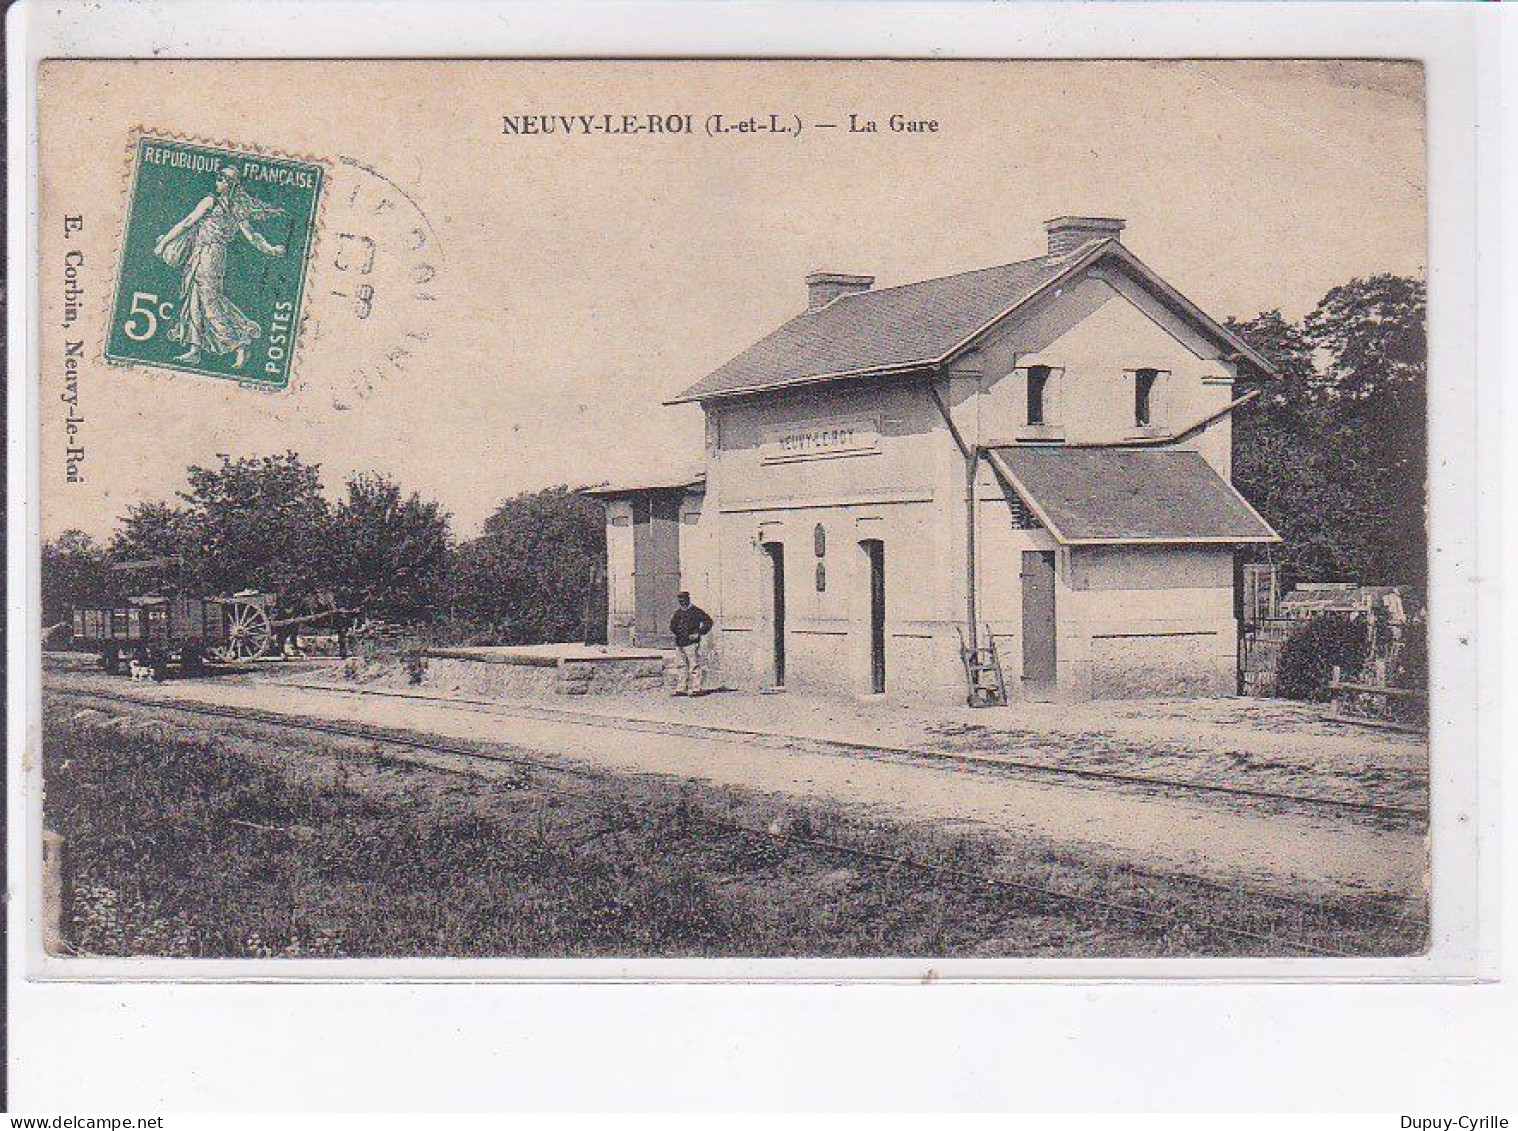 NEUVY-le-ROI: La Gare - état - Neuvy-le-Roi